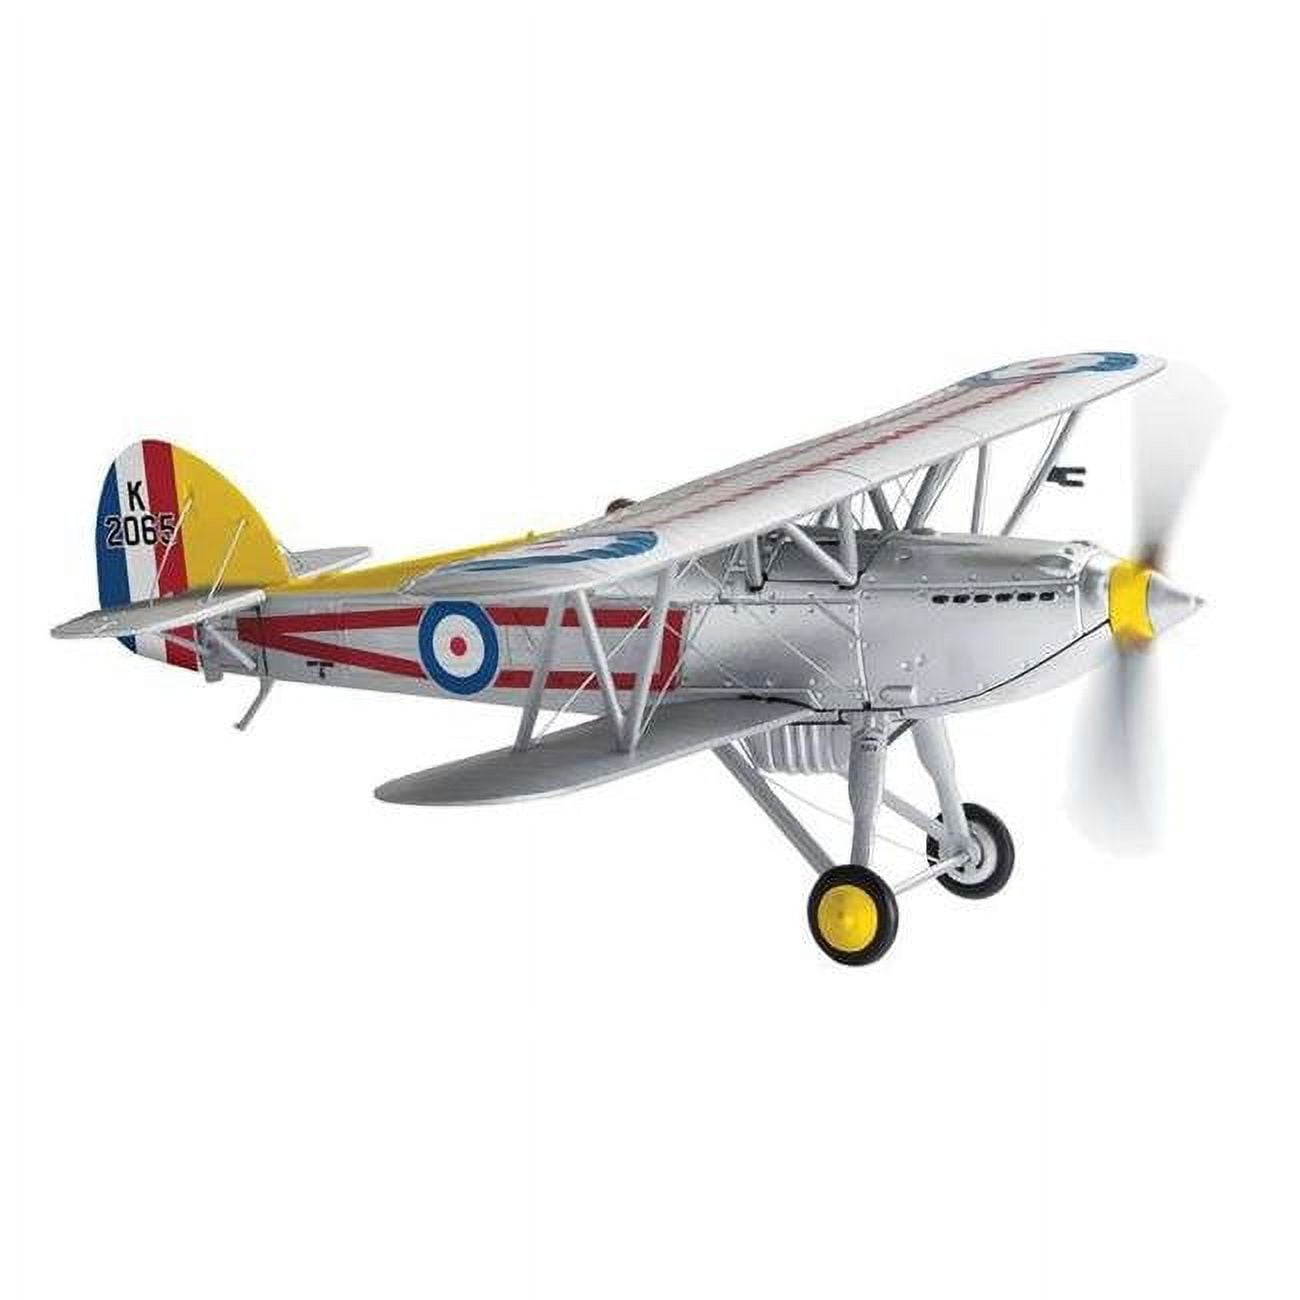 Raf Hawker Fury K2065 Squadron 1 Tangmere C Flight